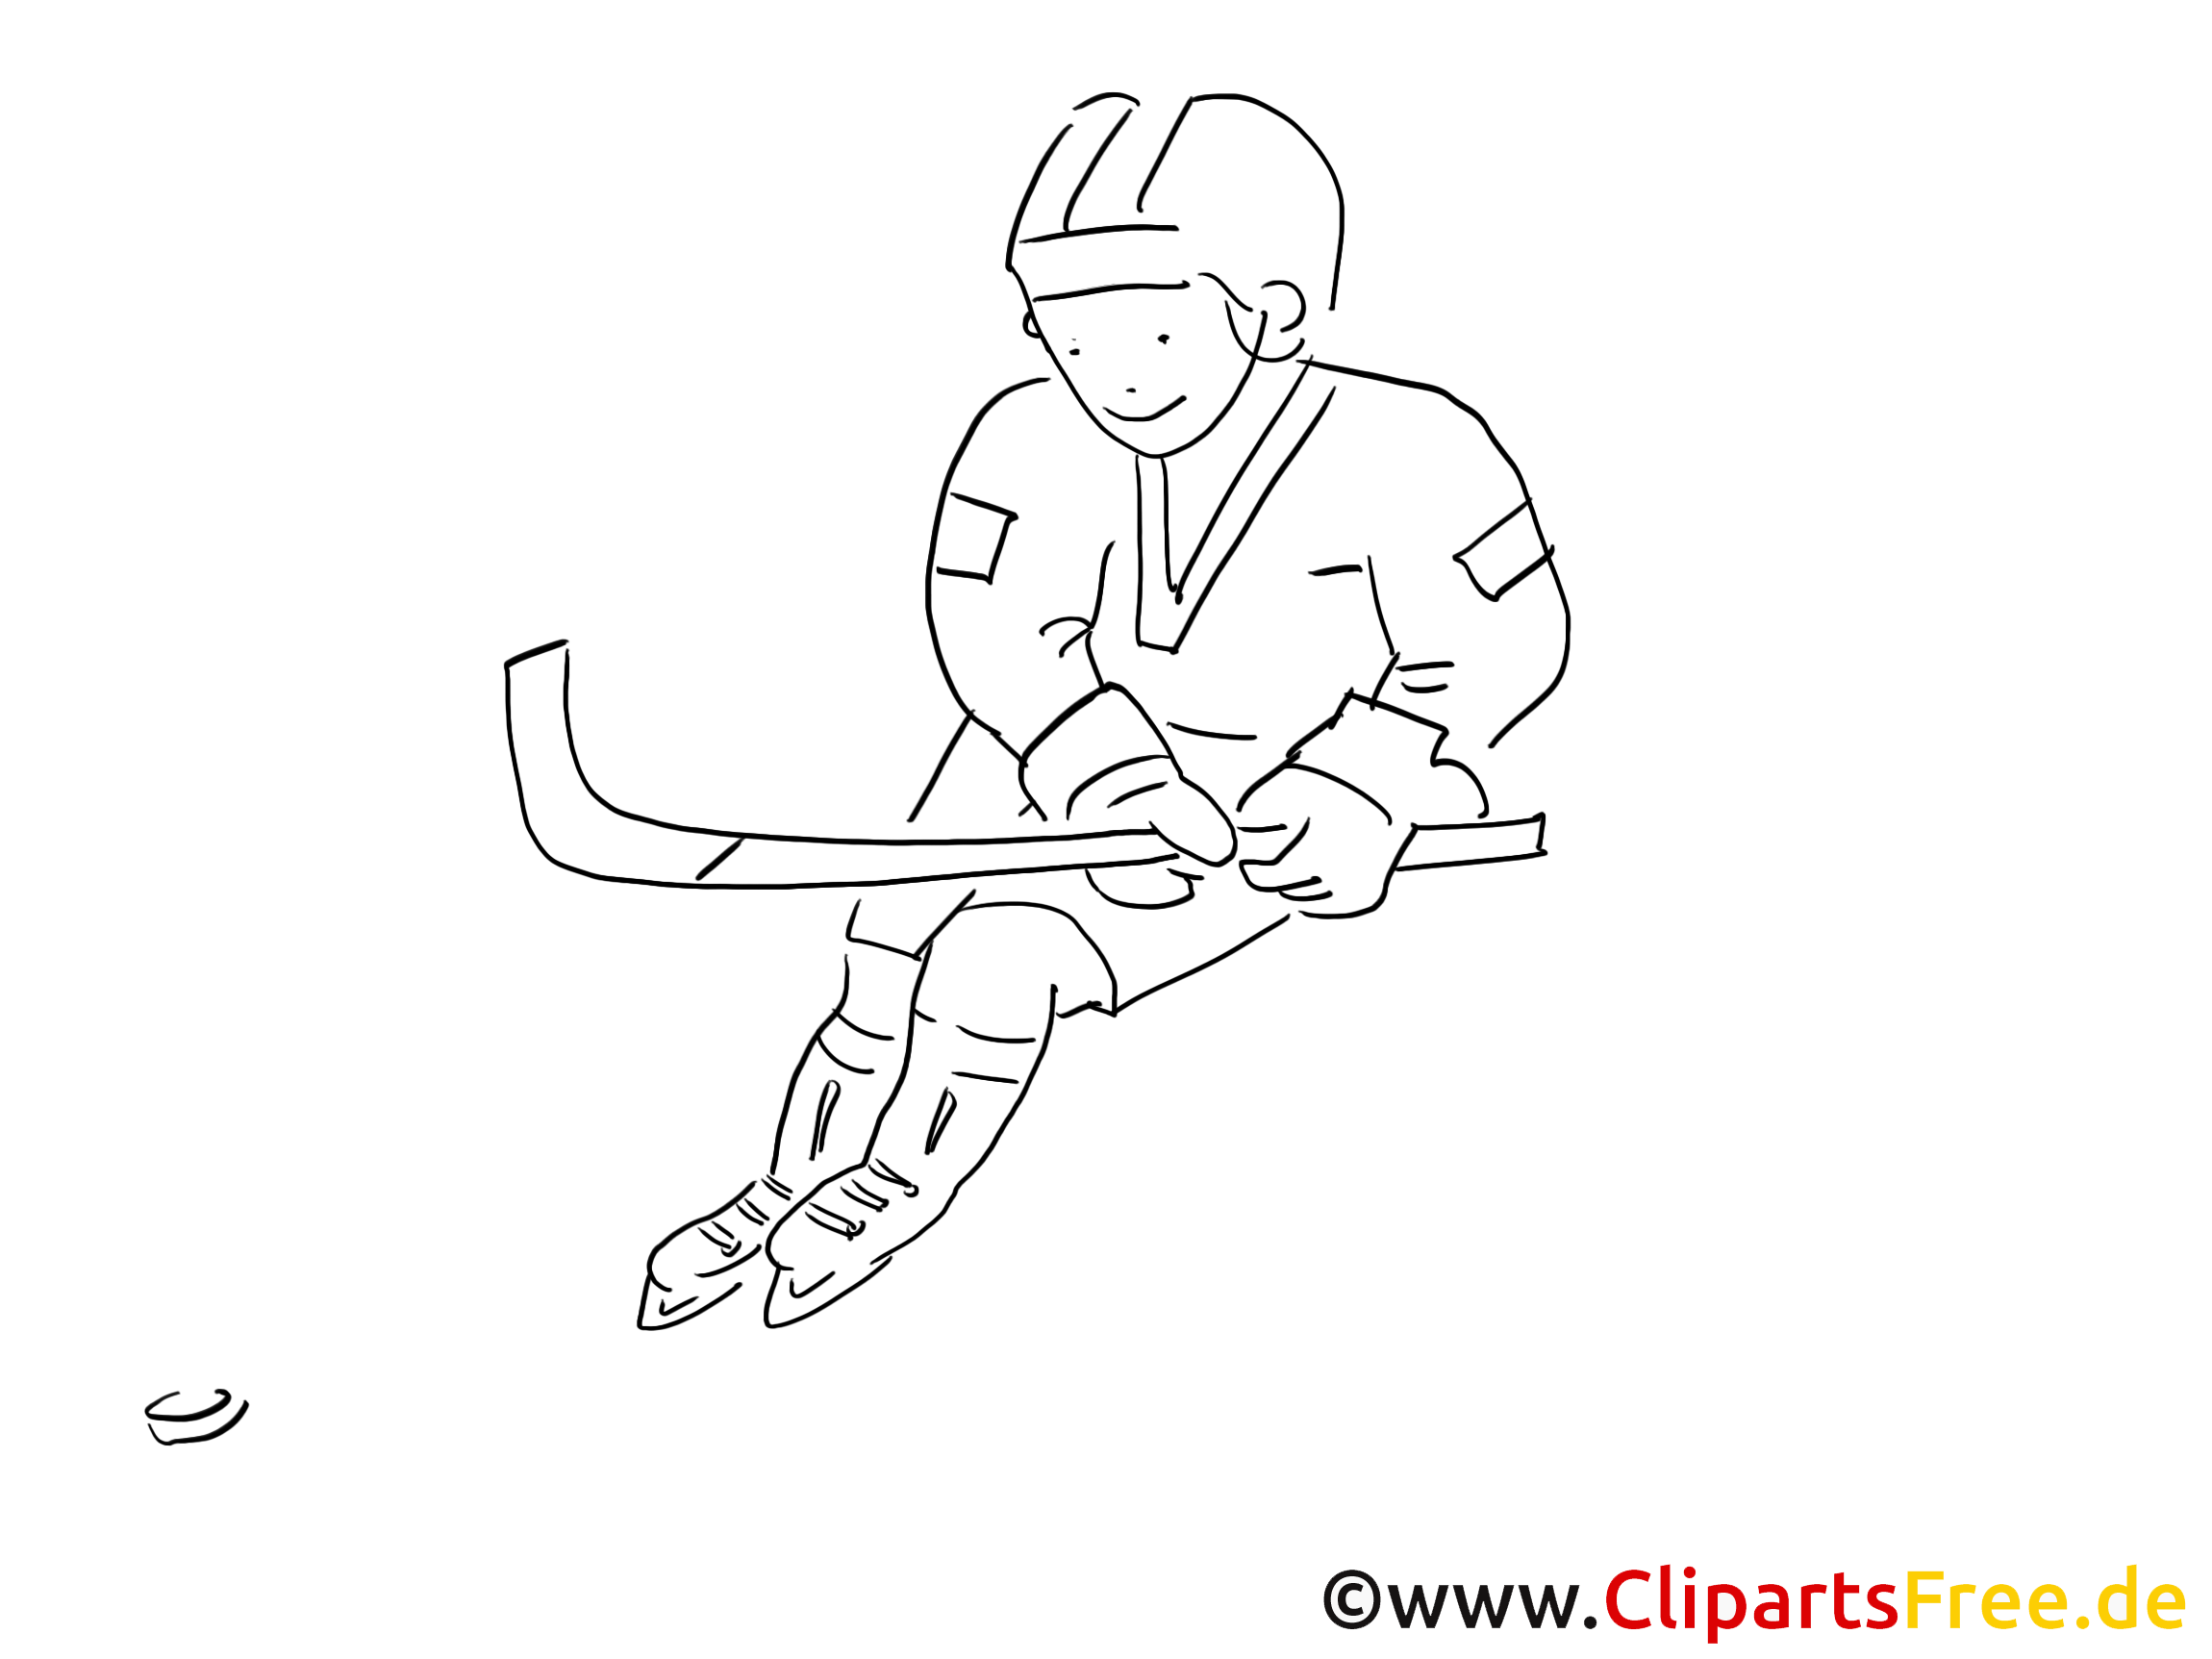 Coloriage hockeyeur - Hockey illustration